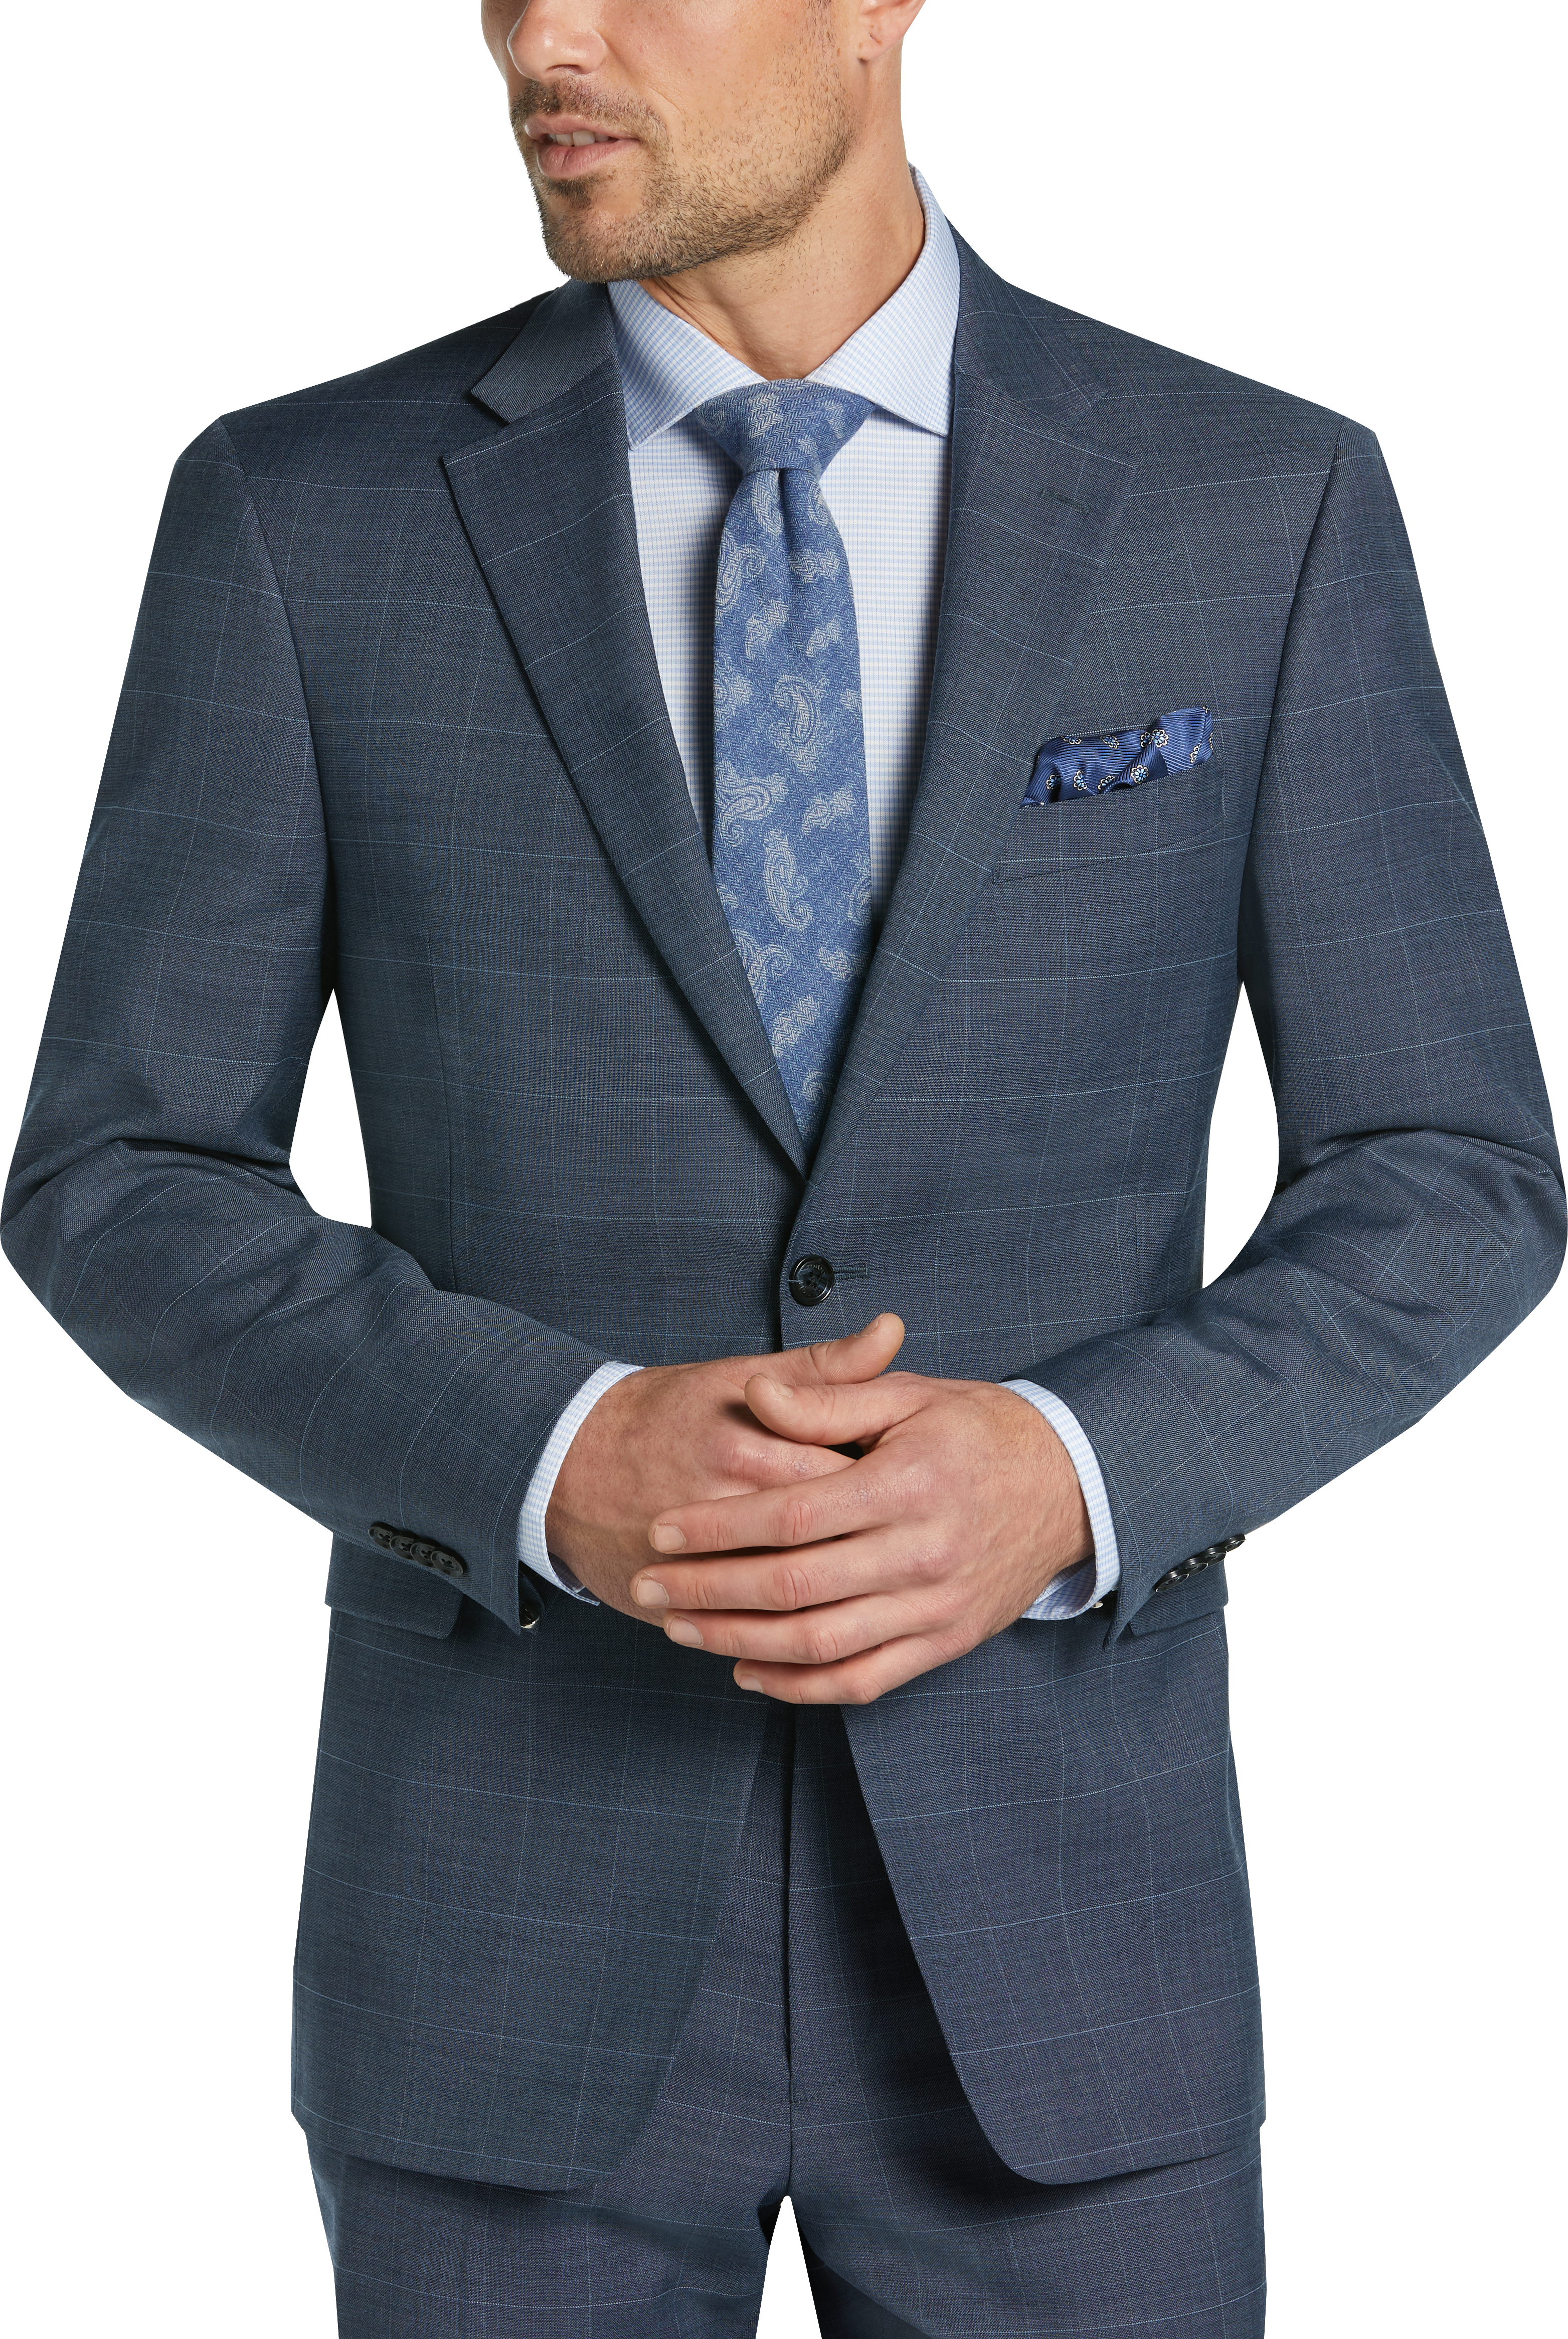 tommy hilfiger blue windowpane suit